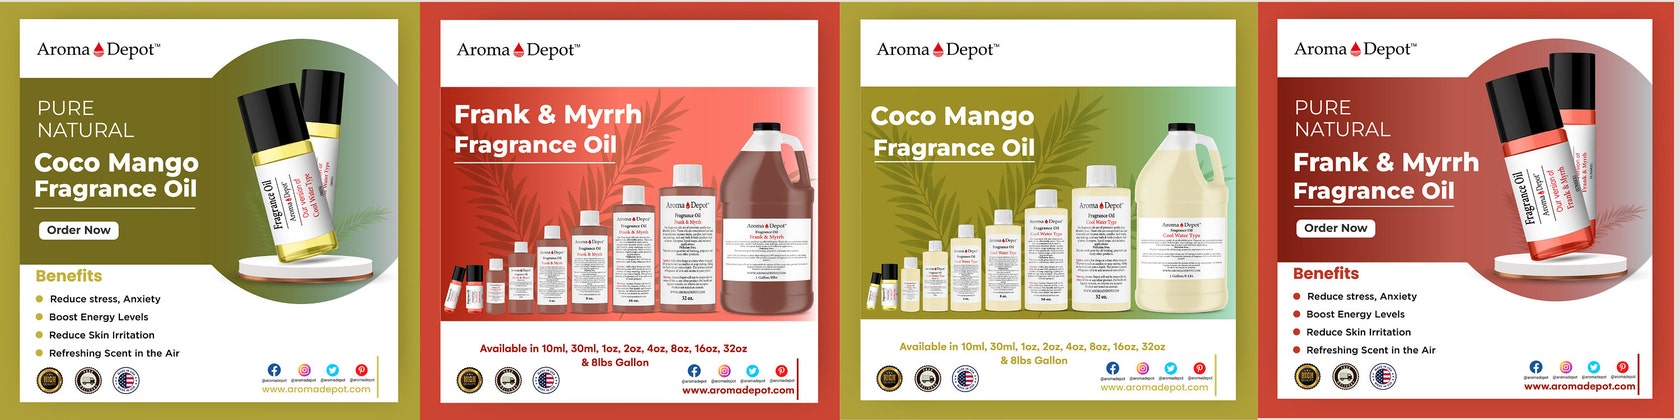 Buy Aroma Depot Peach Type Perfume/Body Oil (7 Sizes) Our